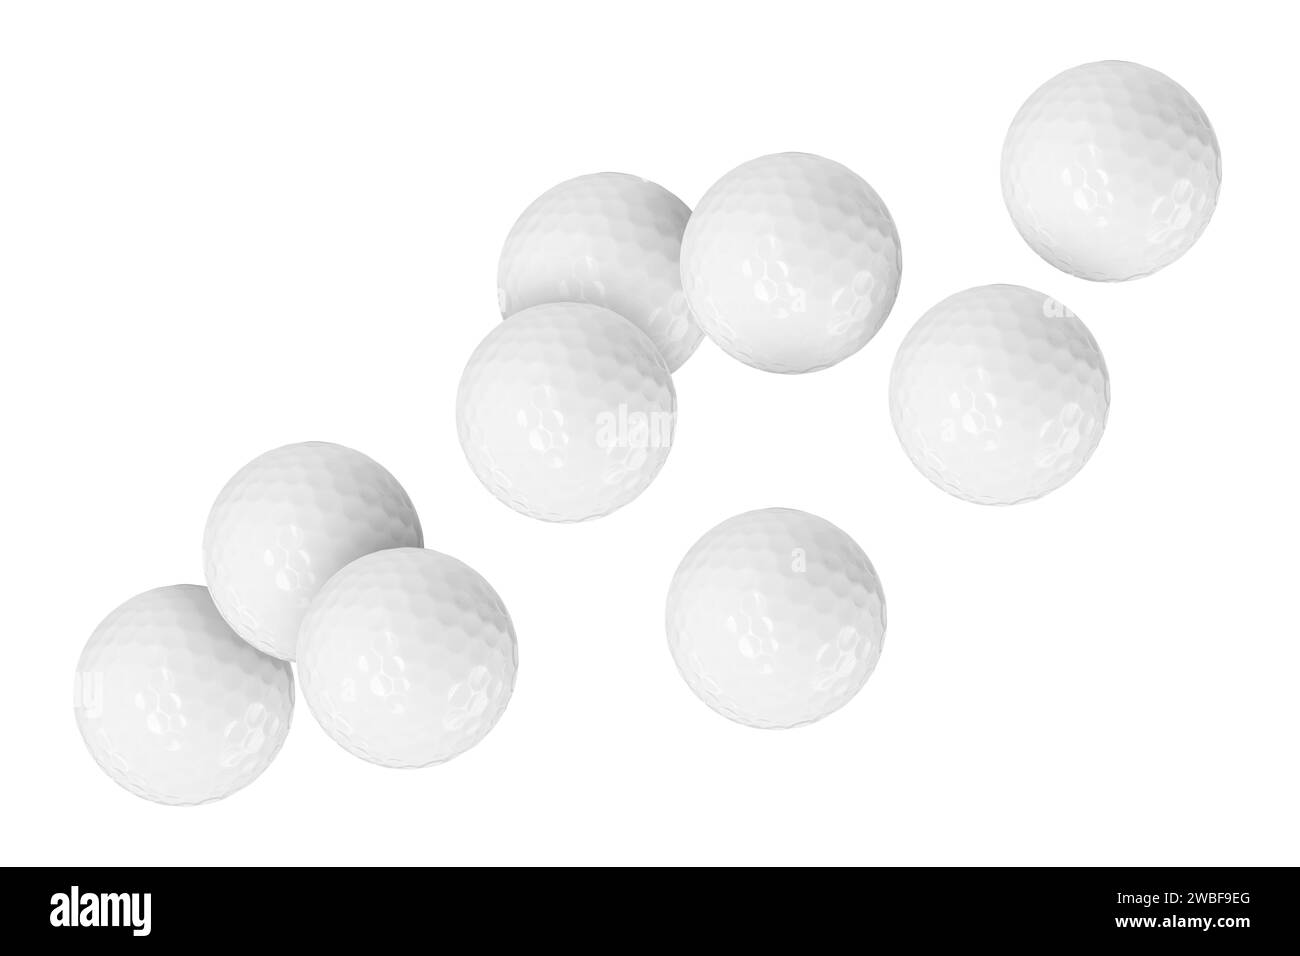 Many golf balls flying on white background Stock Photo - Alamy